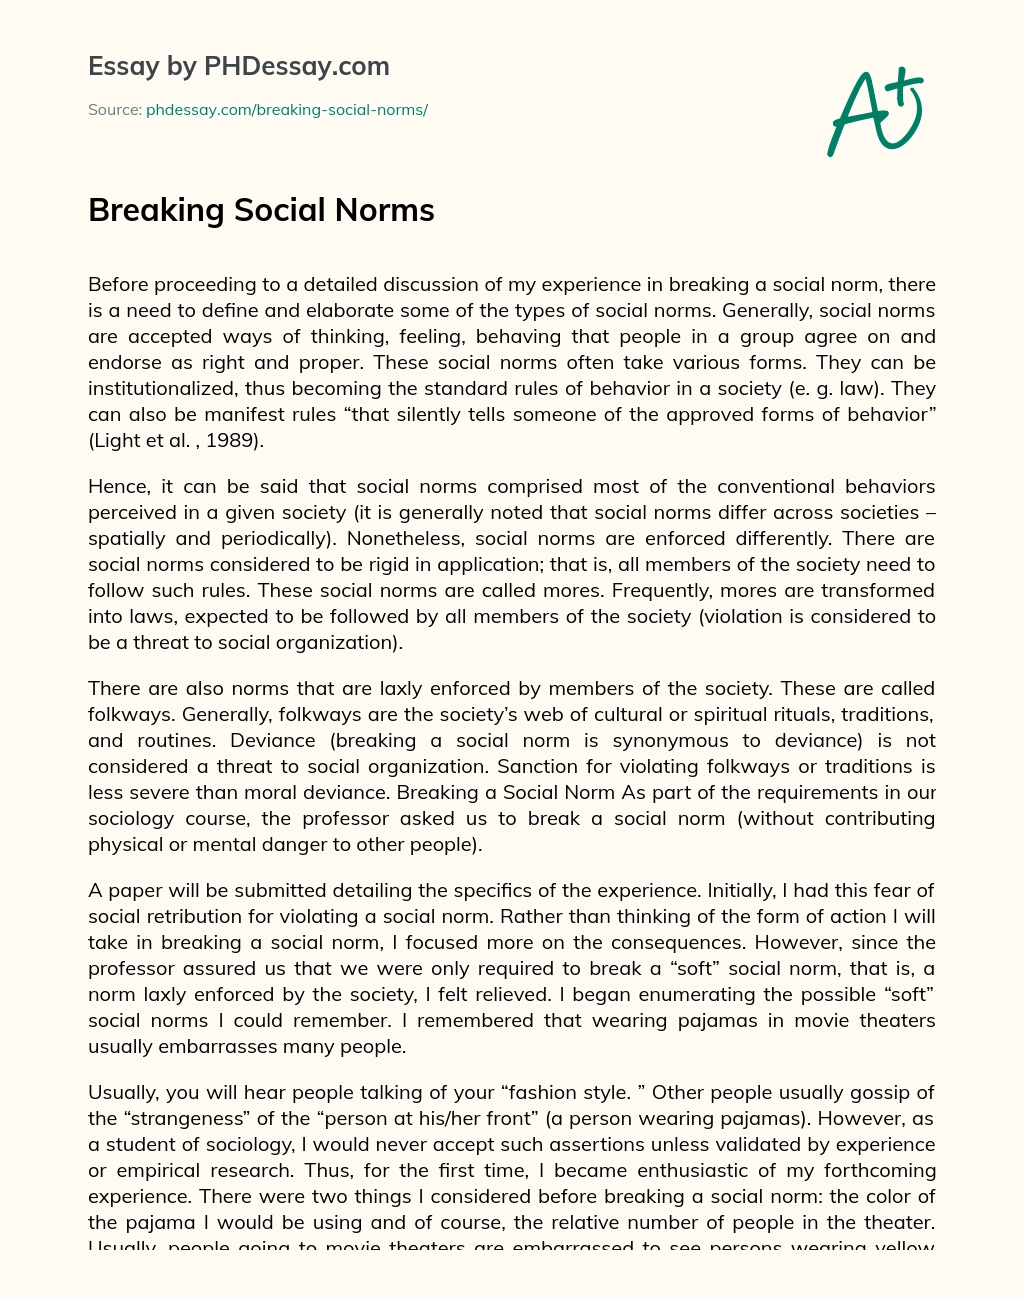 Breaking Social Norms essay